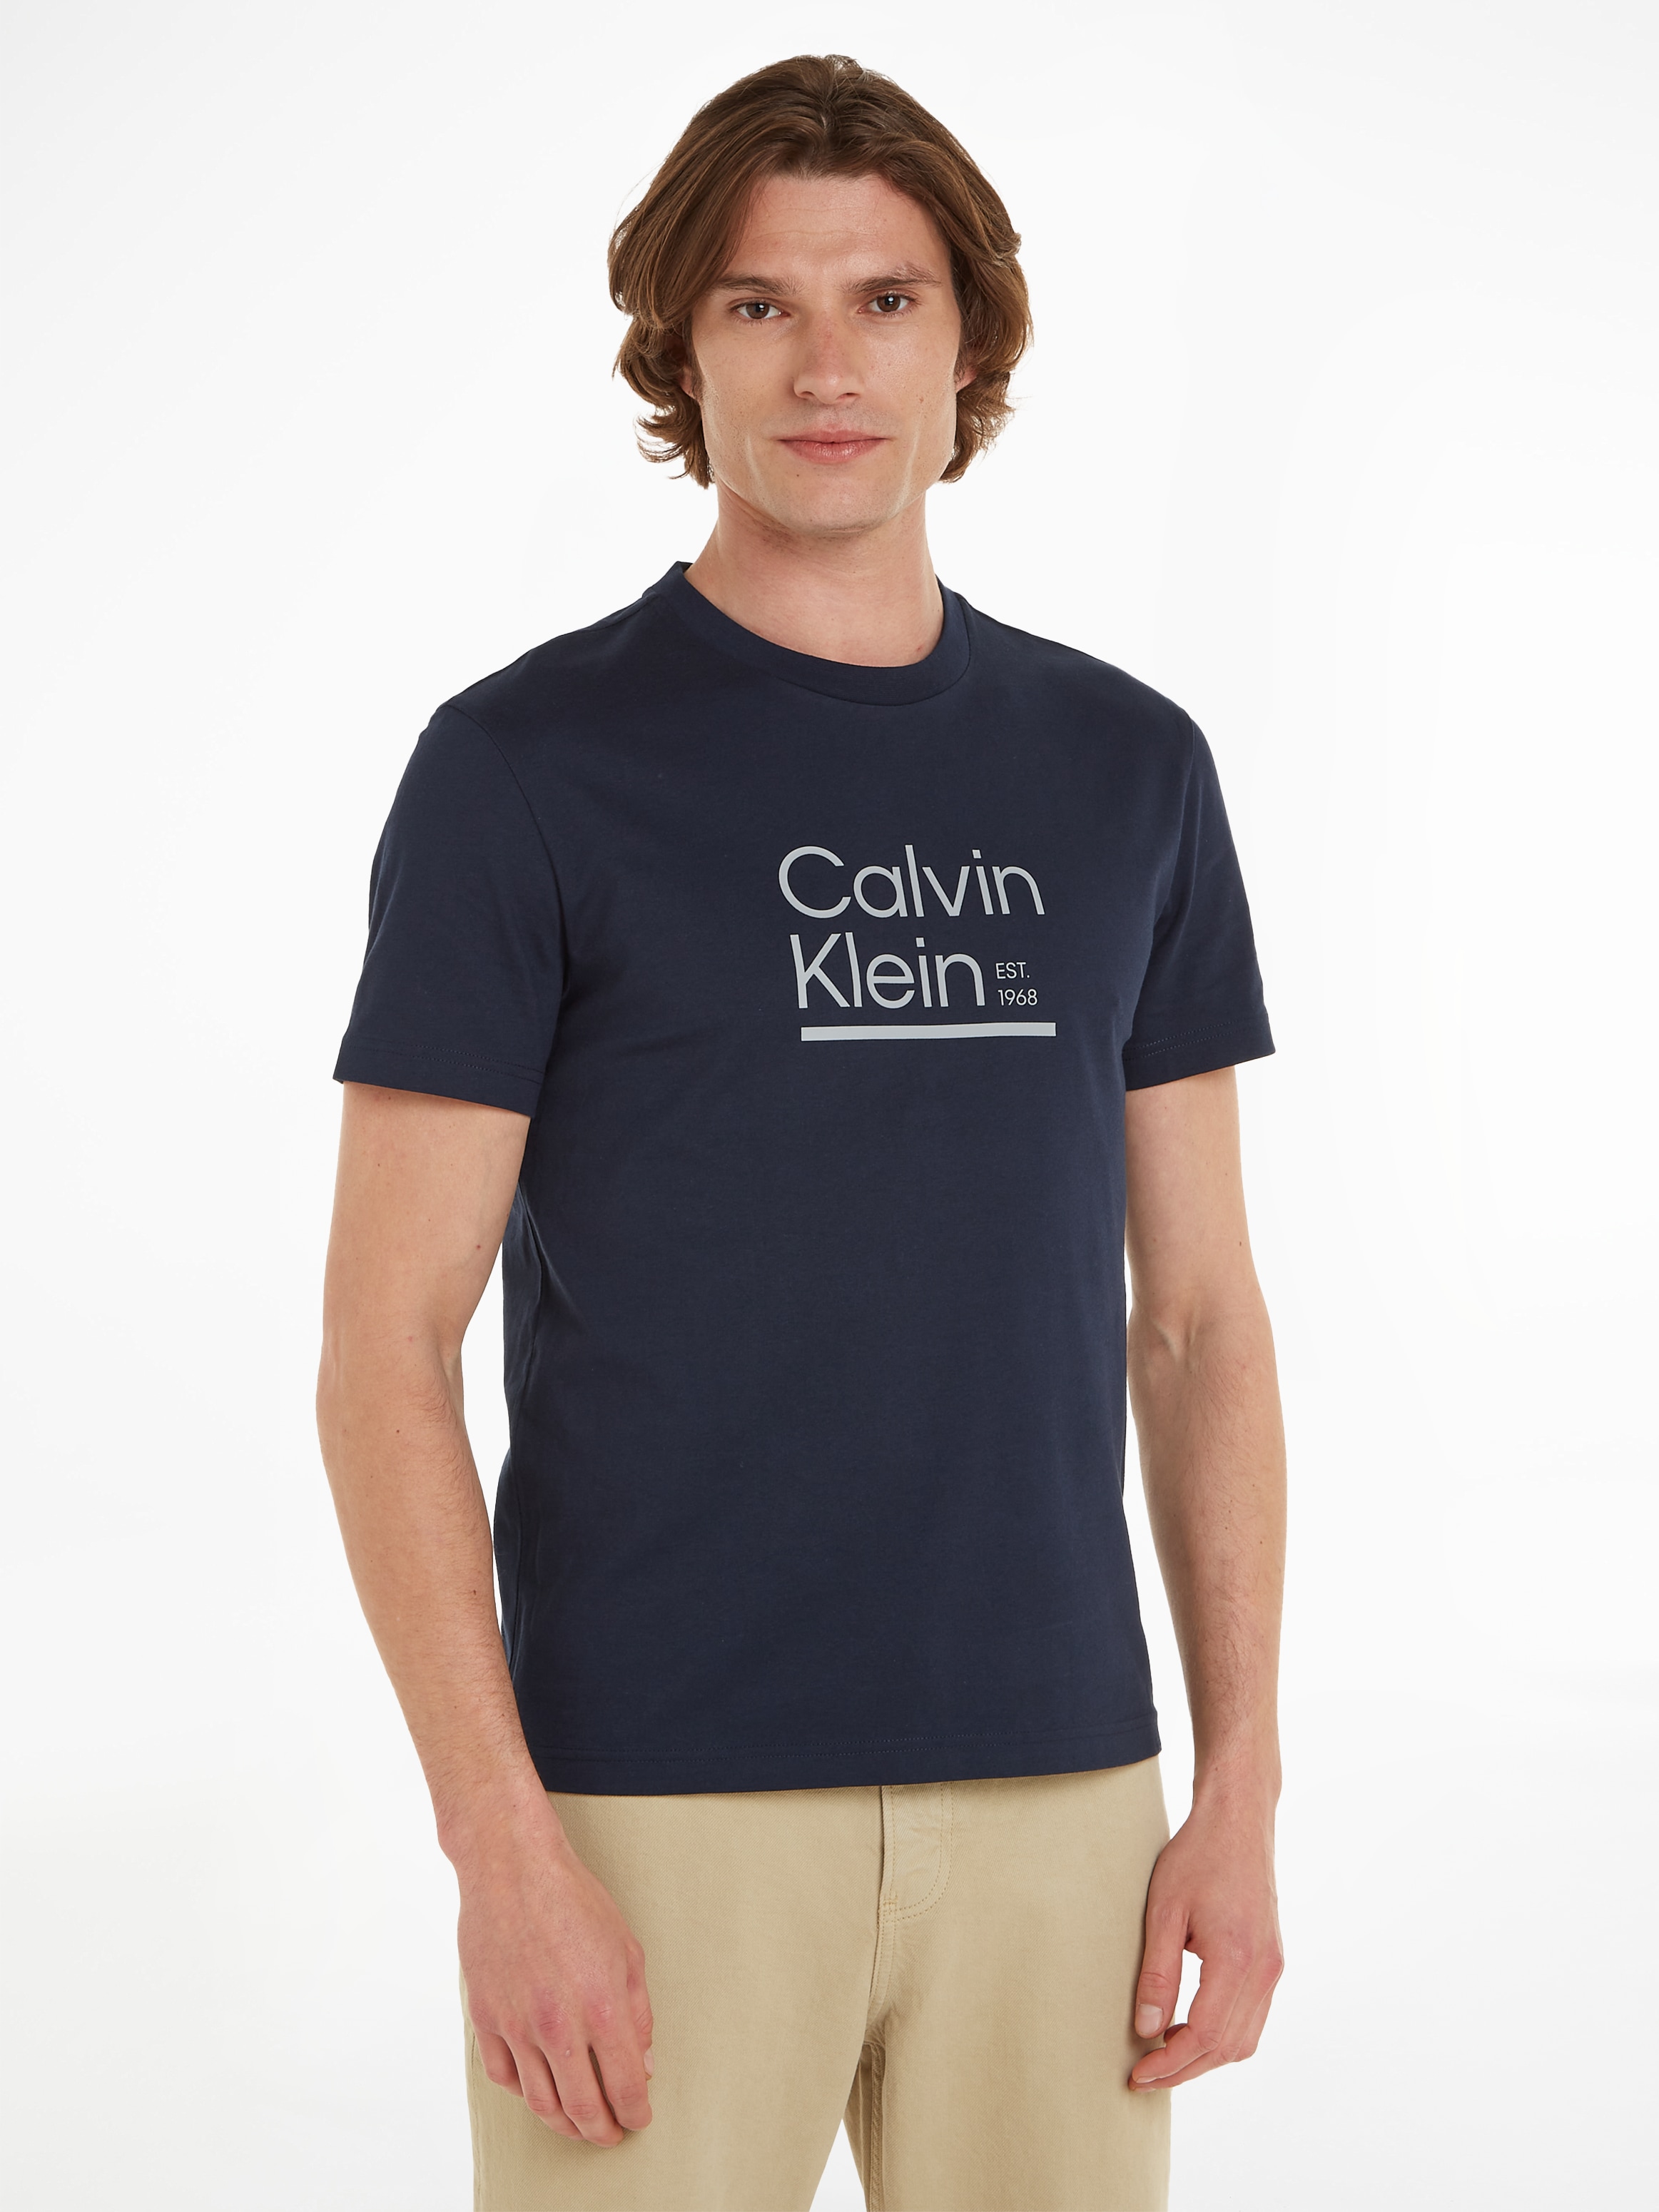 online CK-Logodruck T-SHIRT«, Klein T-Shirt OTTO »CONTRAST mit bei LOGO Calvin LINE